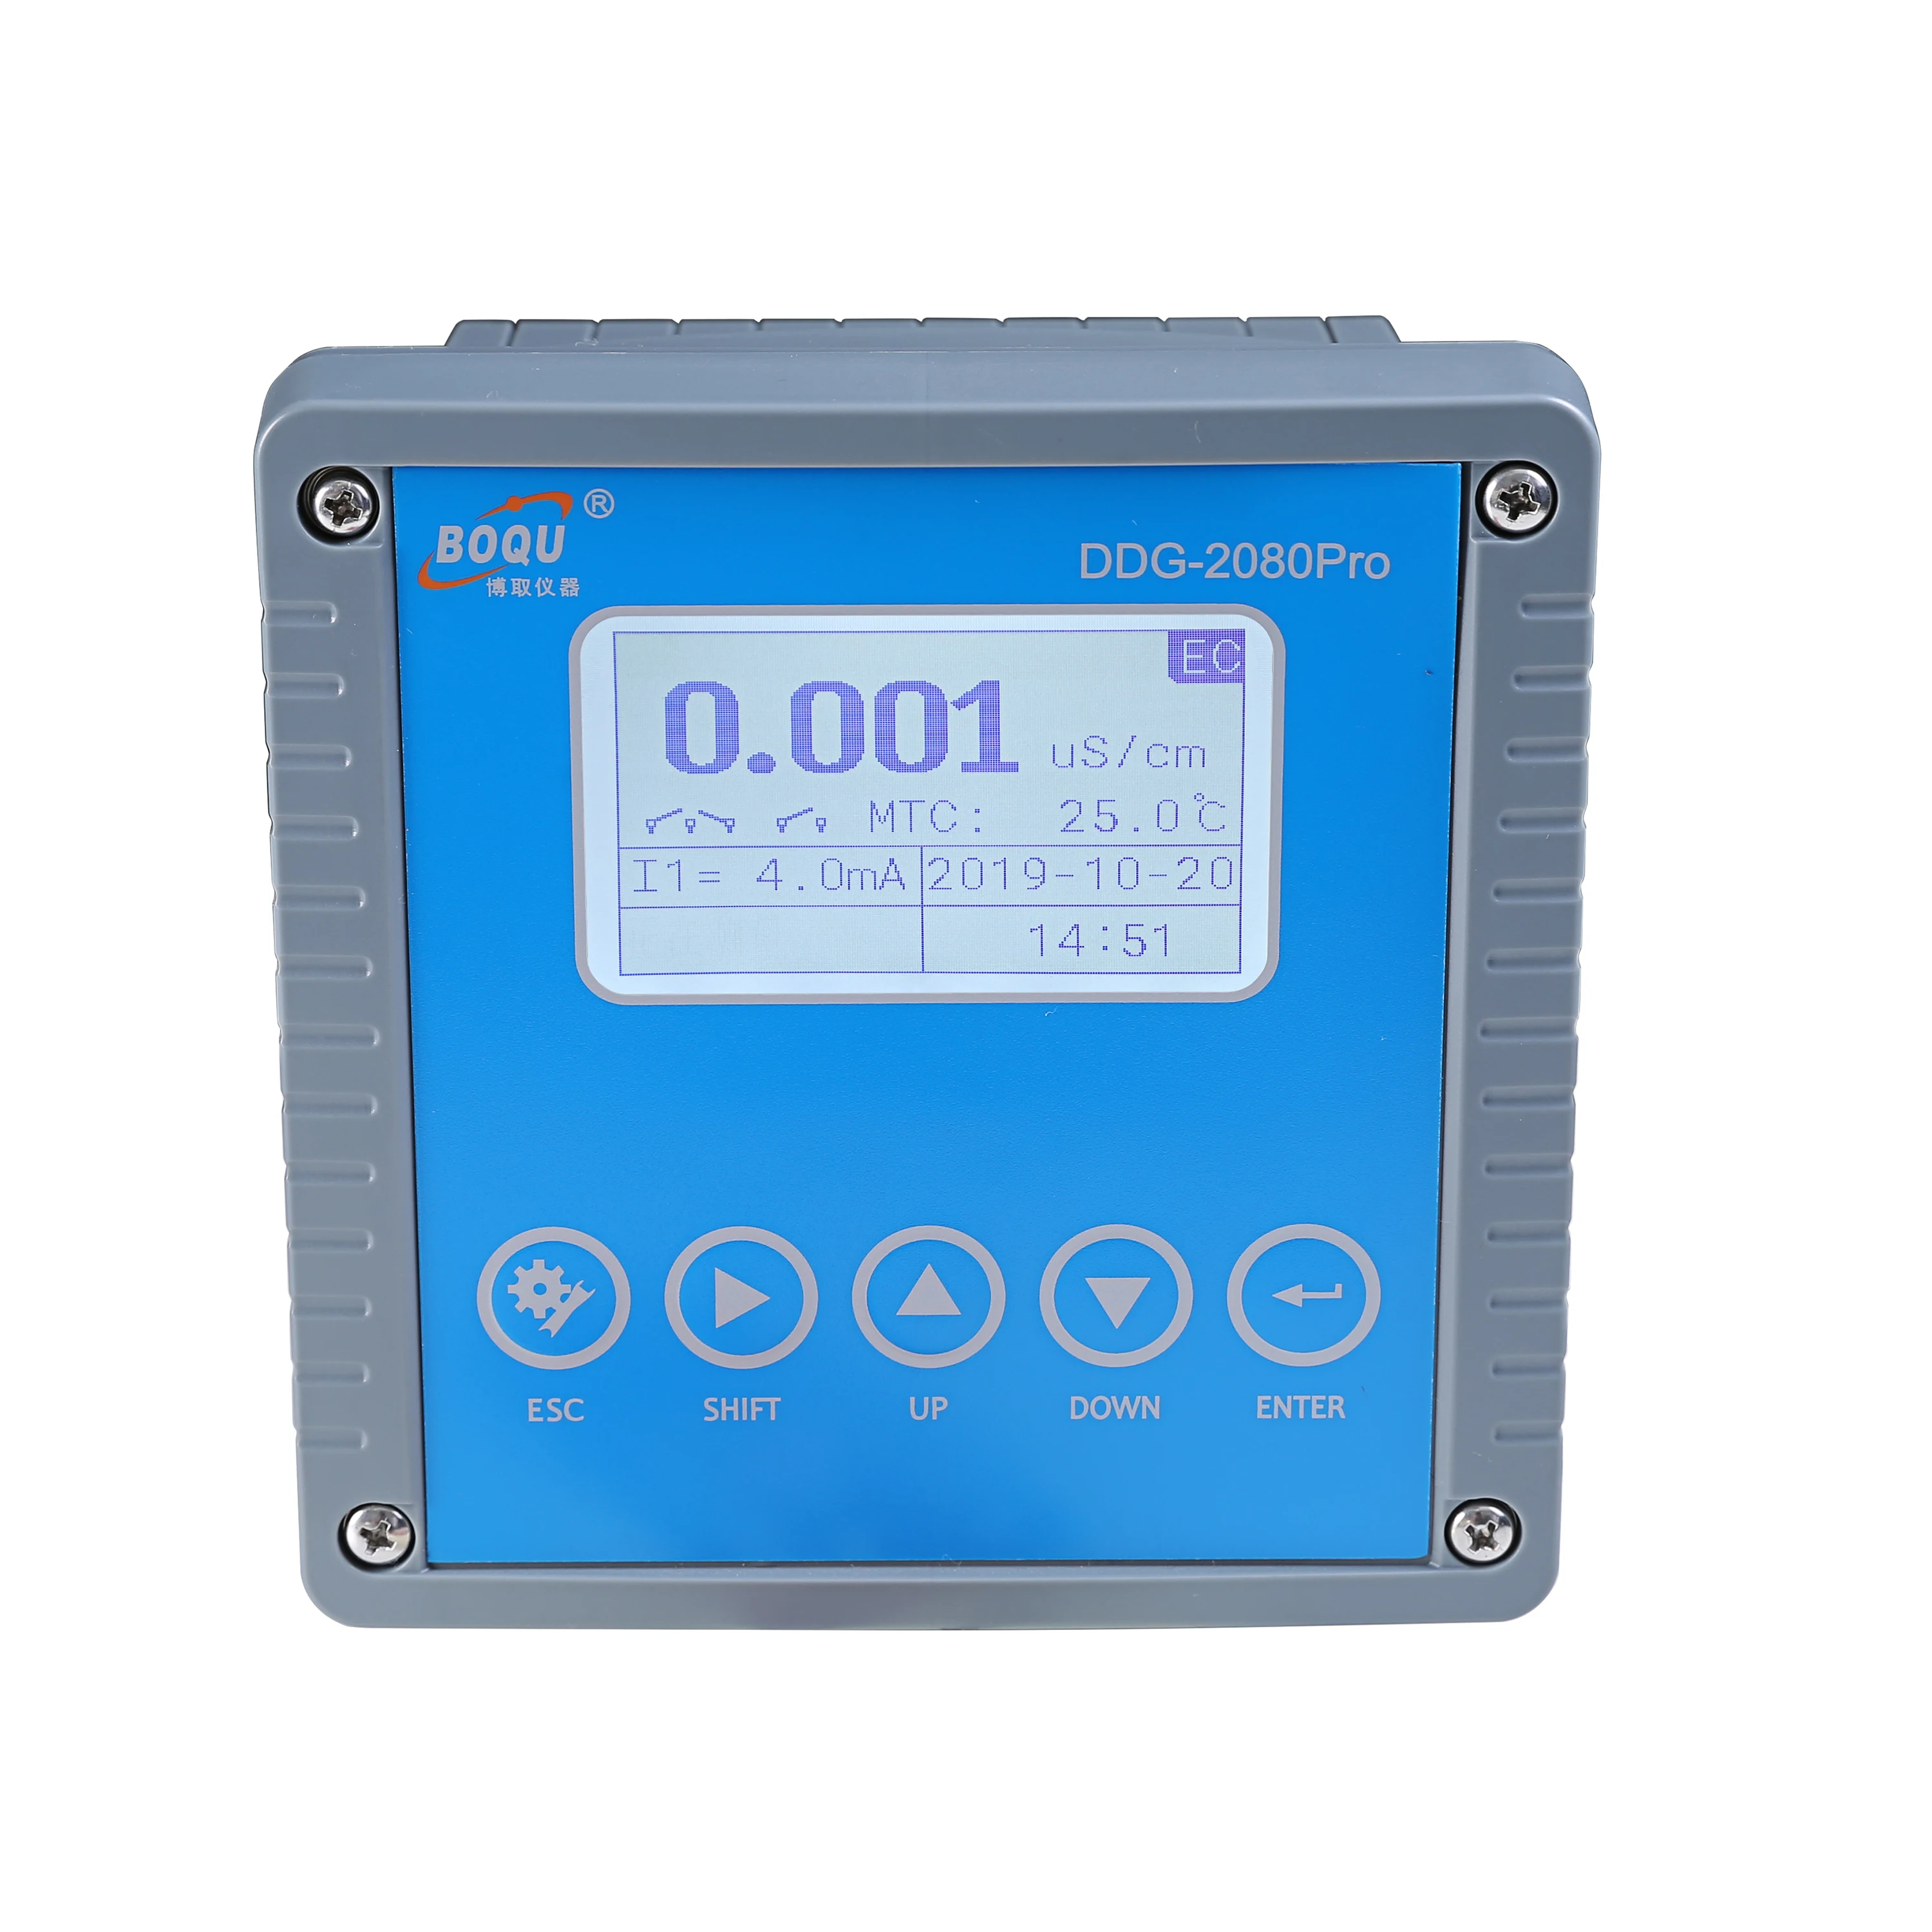 

DDG-2080Pro Water quality tester 6 in 1 ec tds orp digital monitor for Swimming Pool pH Meter BOQU Manufacturer DDG-2080Pro